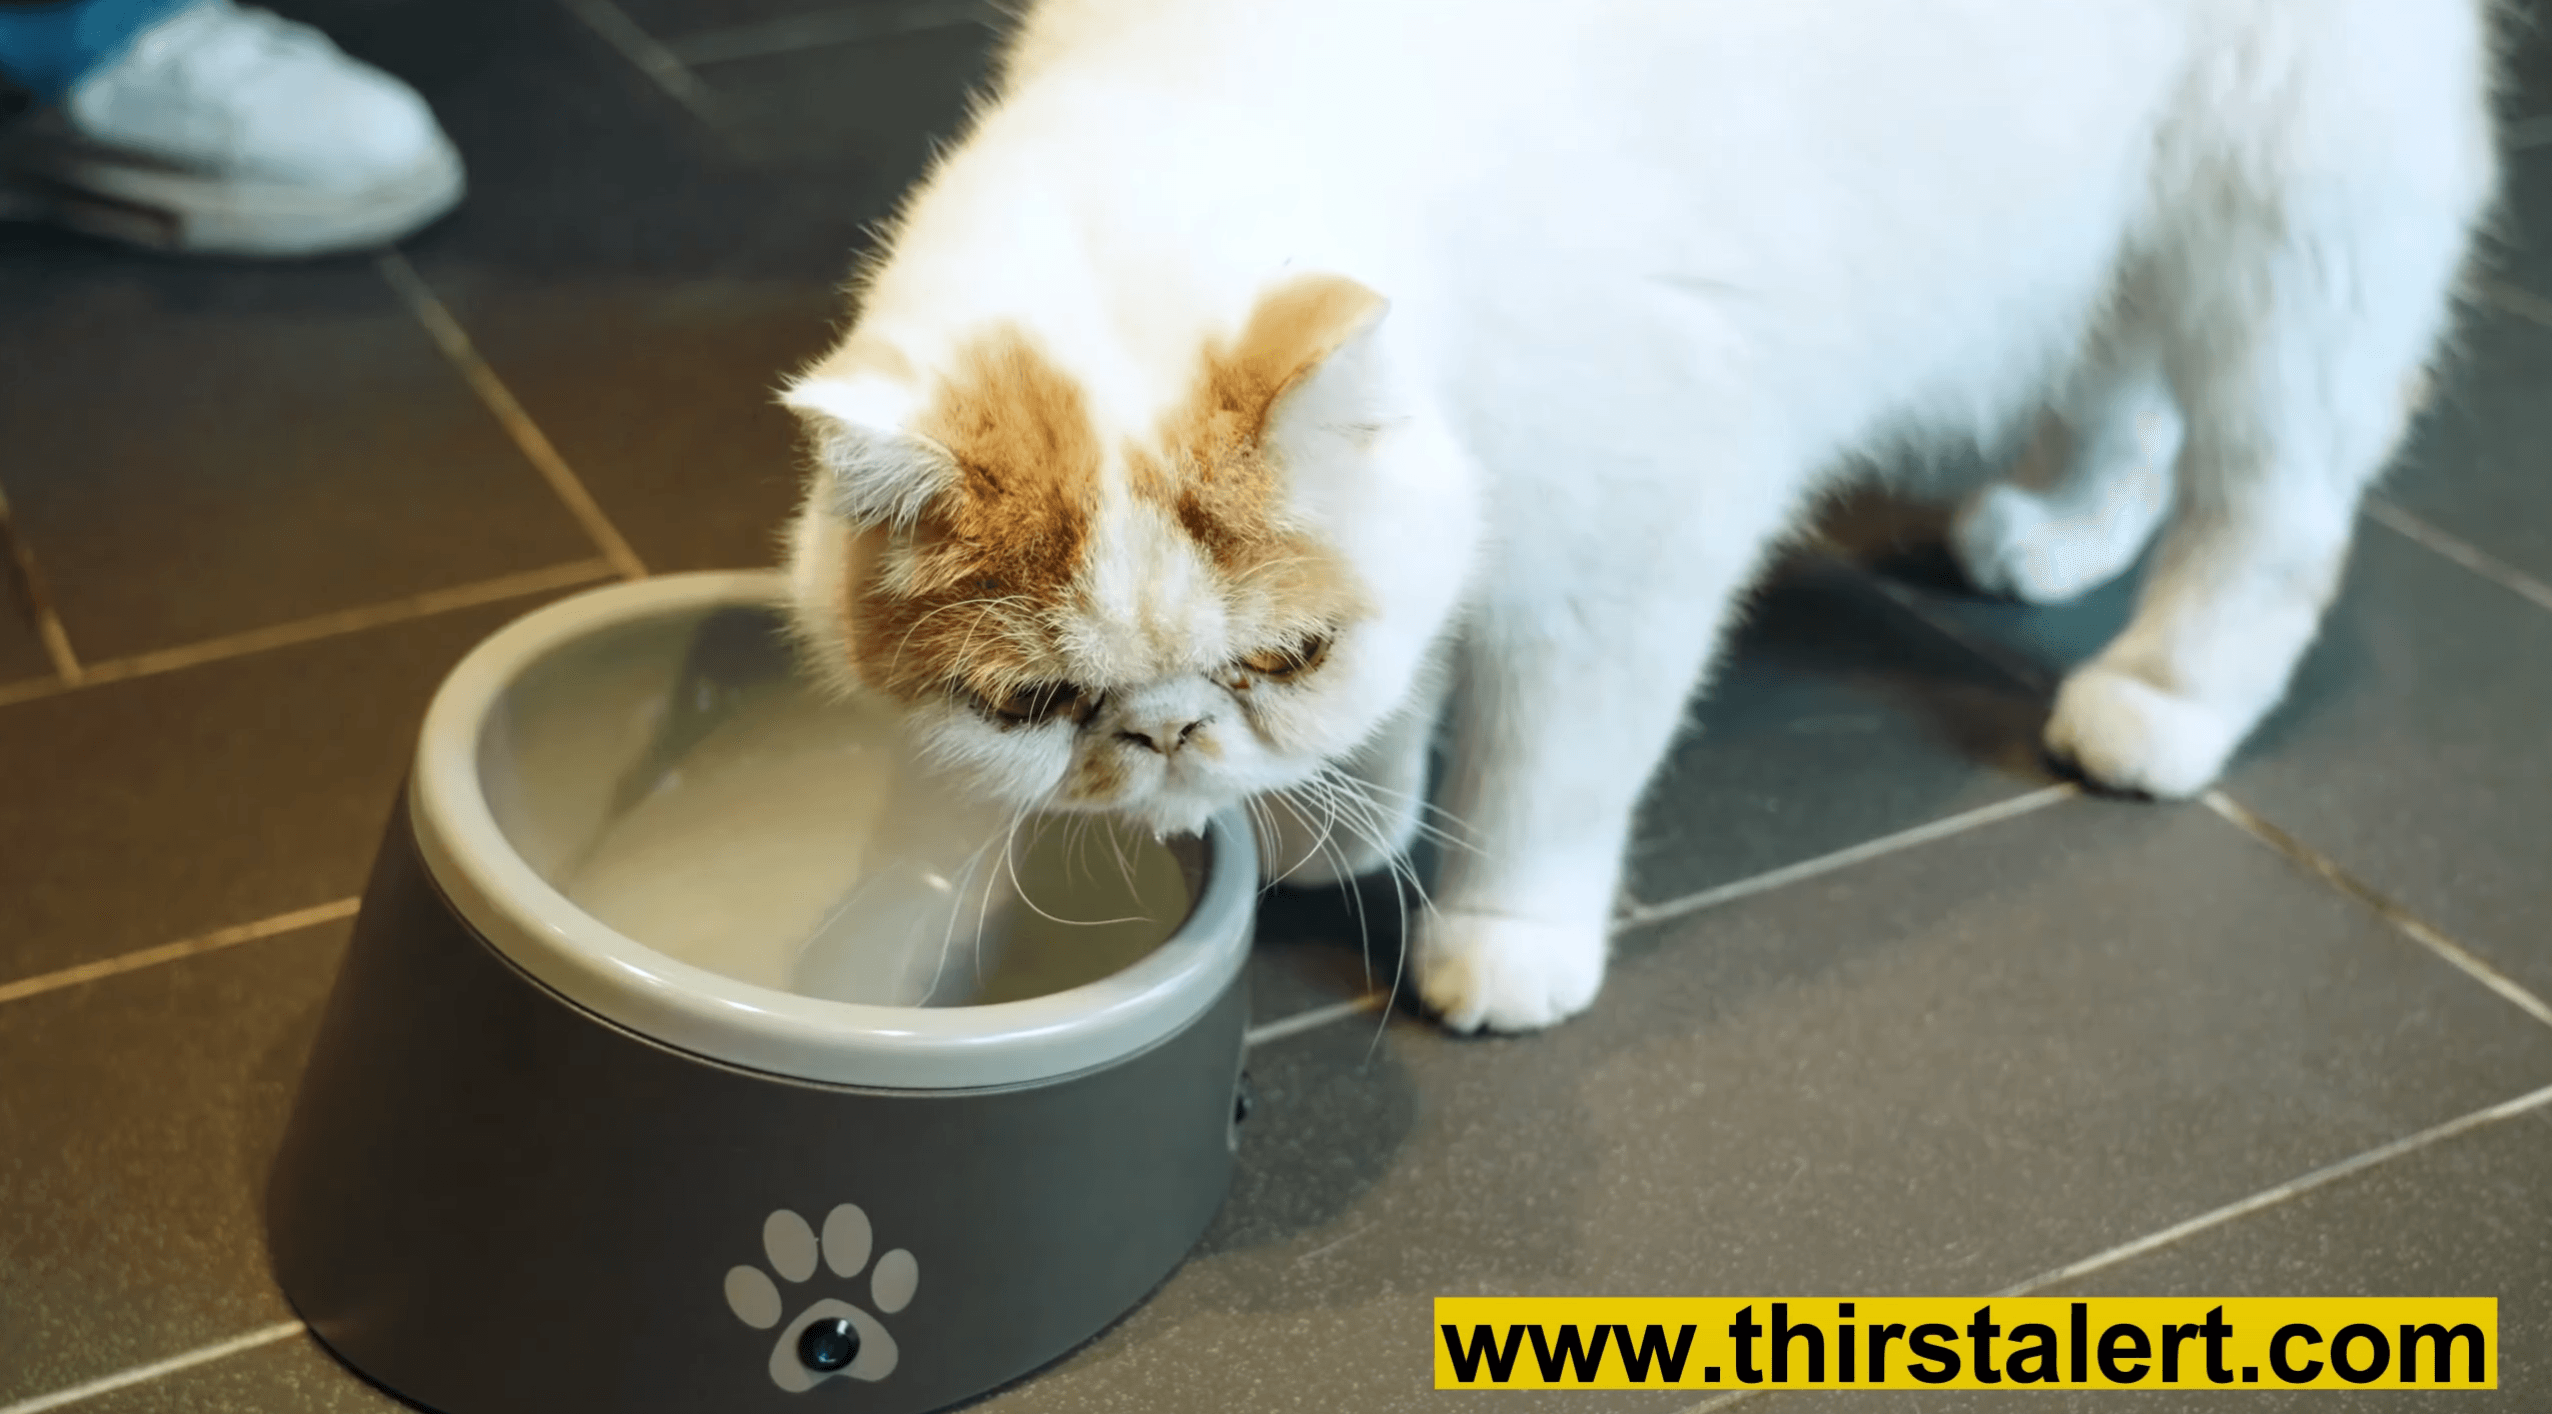 Load video: Cat water bowl